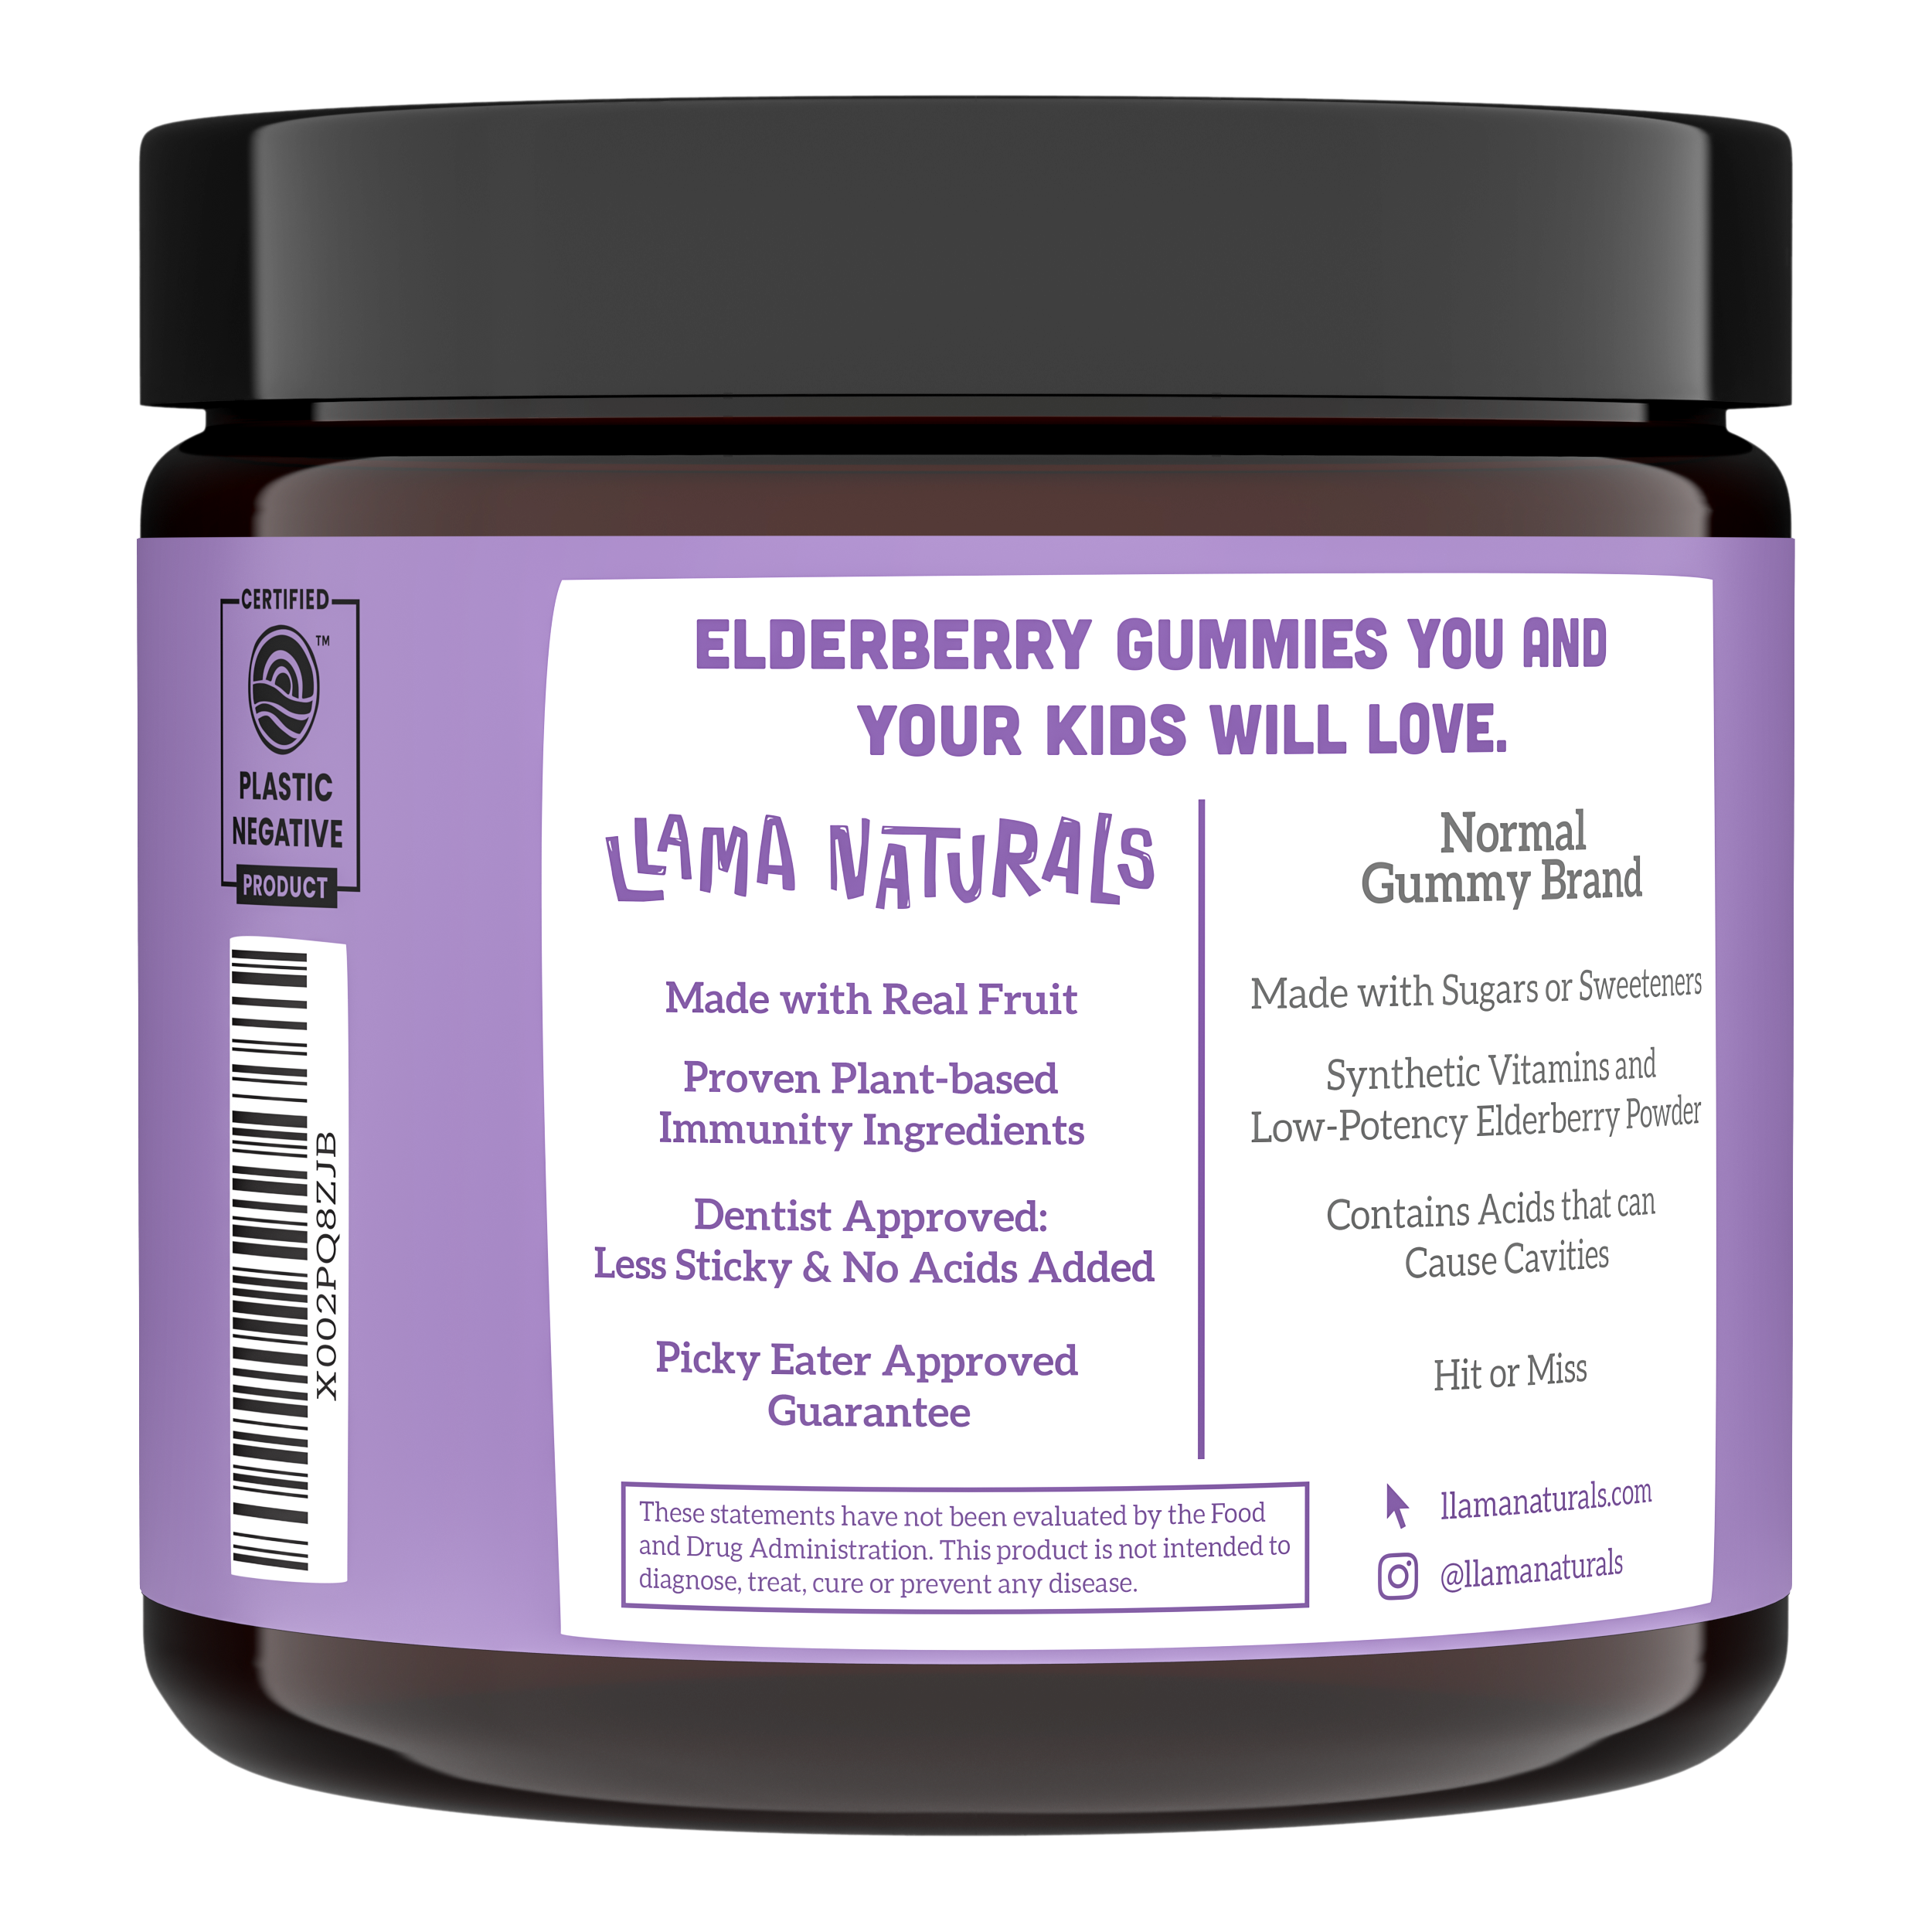 Llama Naturals Kids Whole Fruit Immunity Gummies - Elderberry